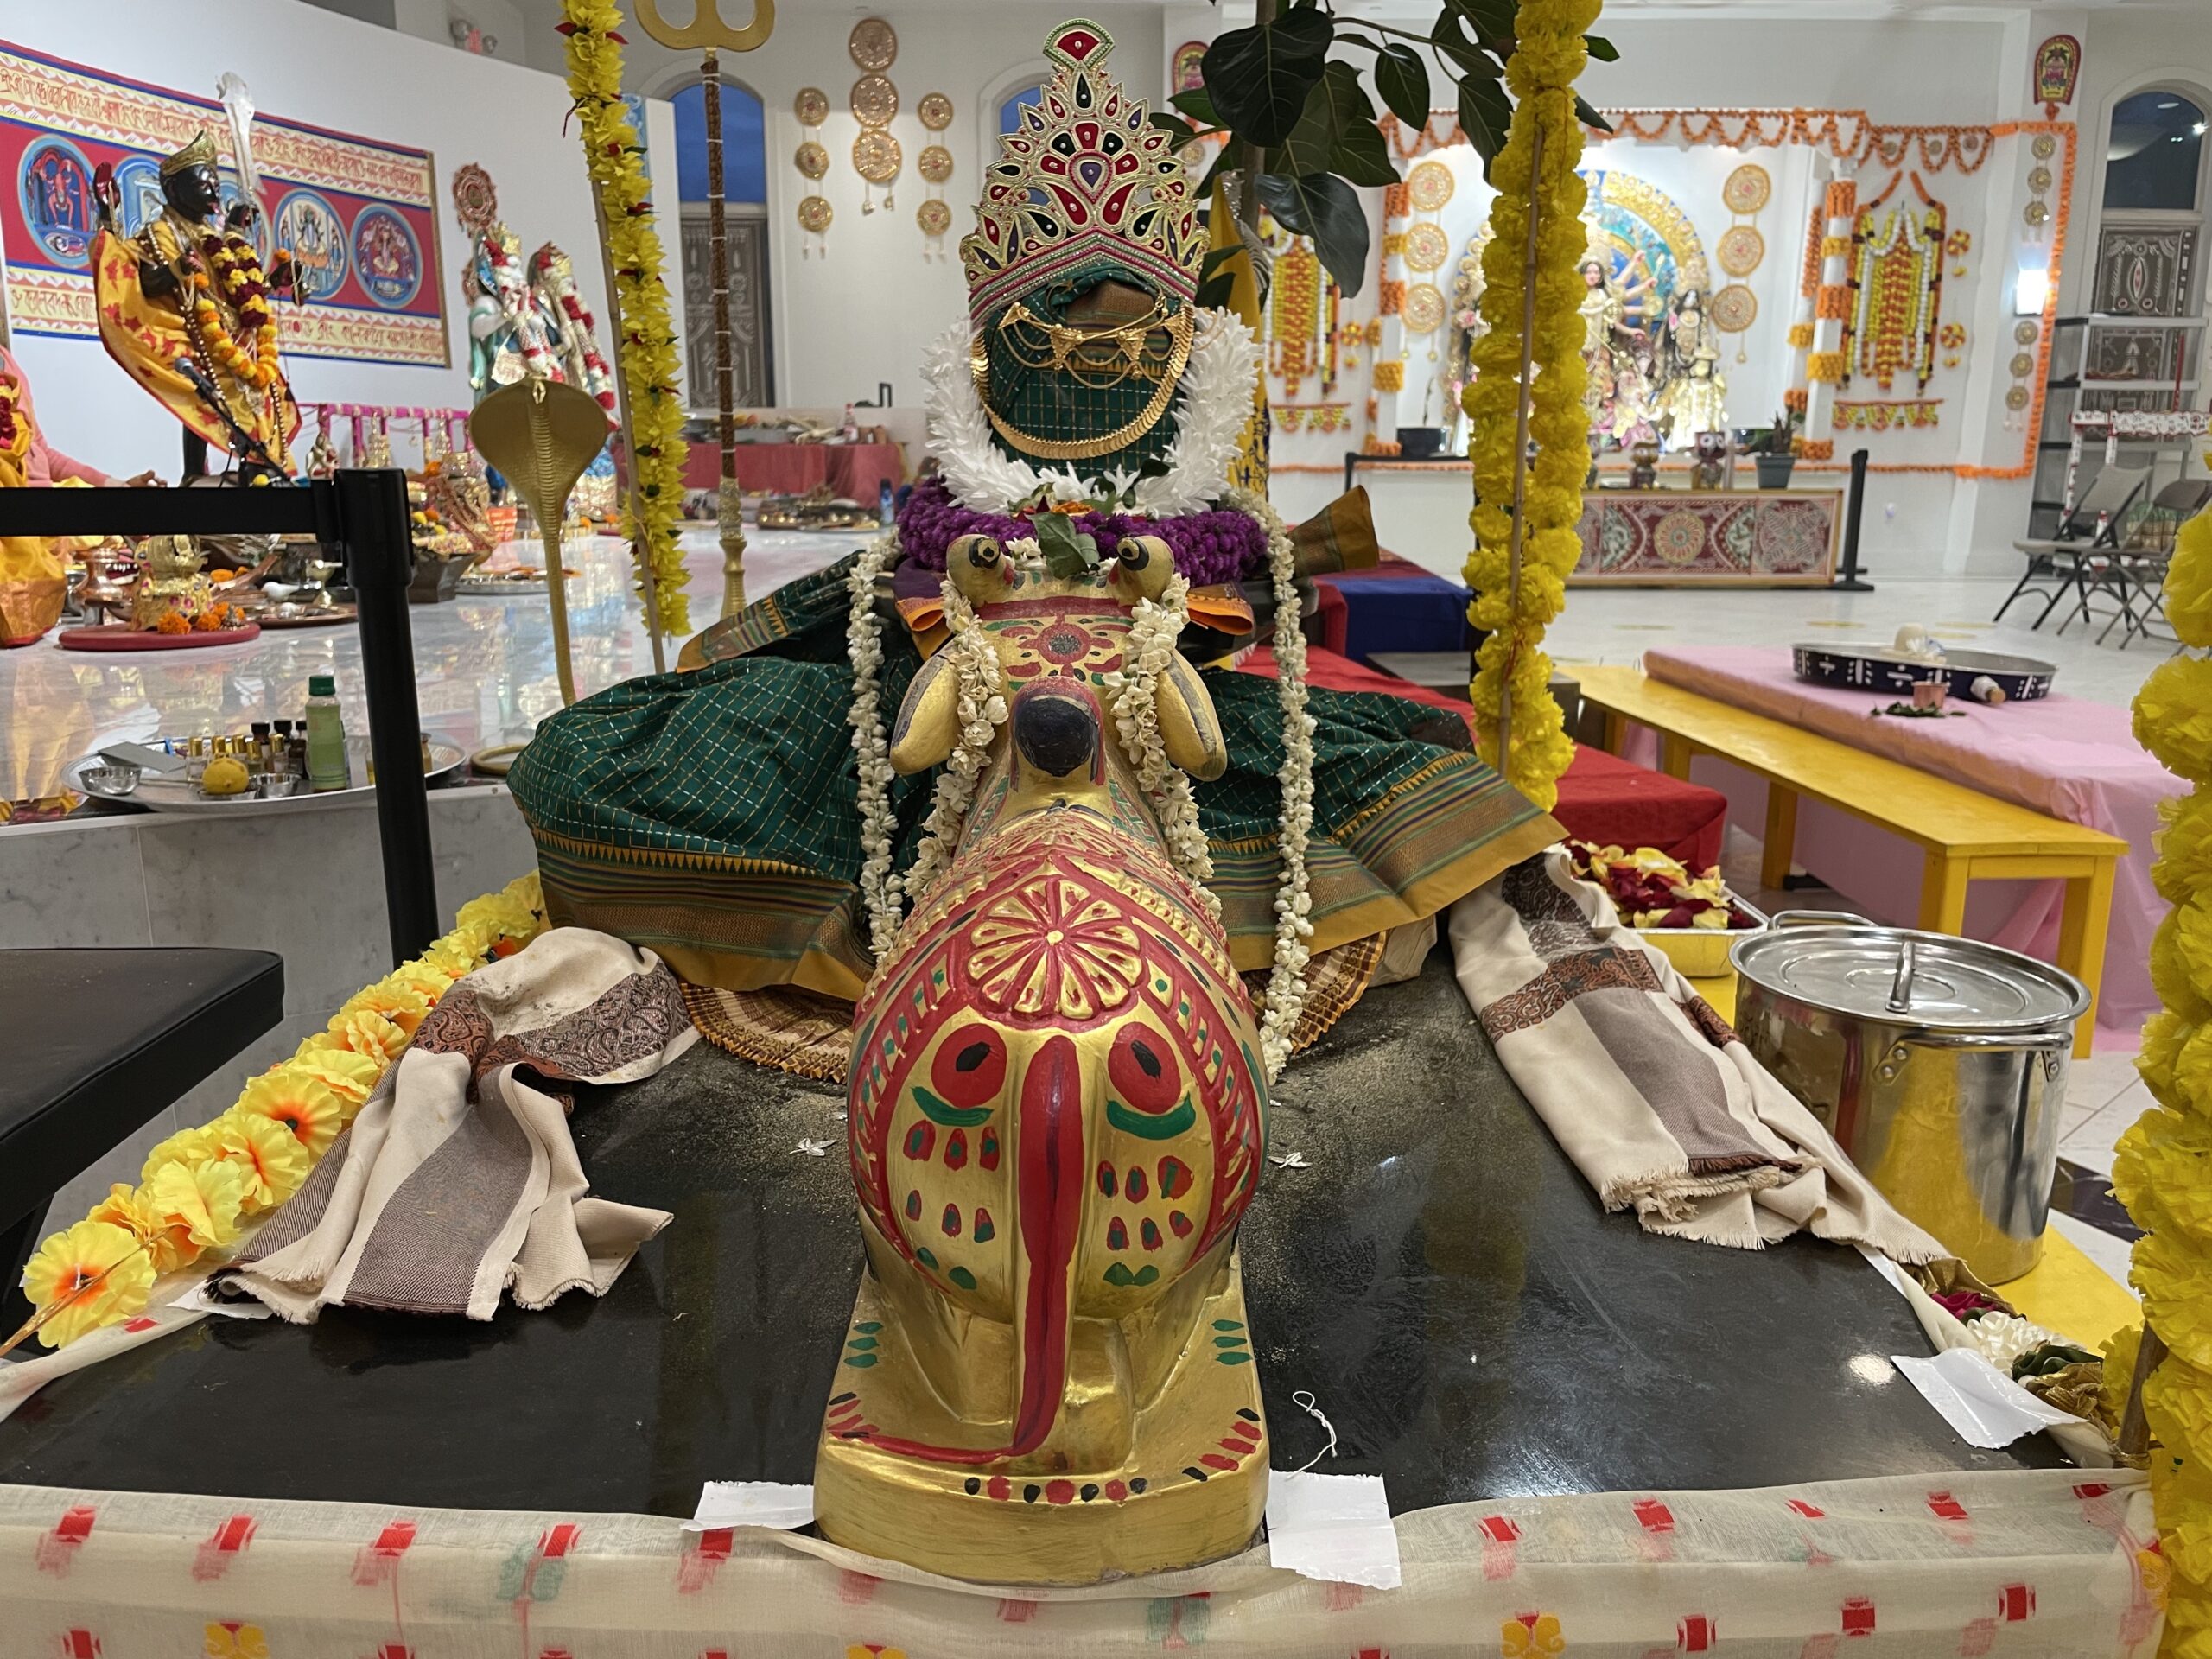 Ananda Mandir – Hindu Temple and Community Center